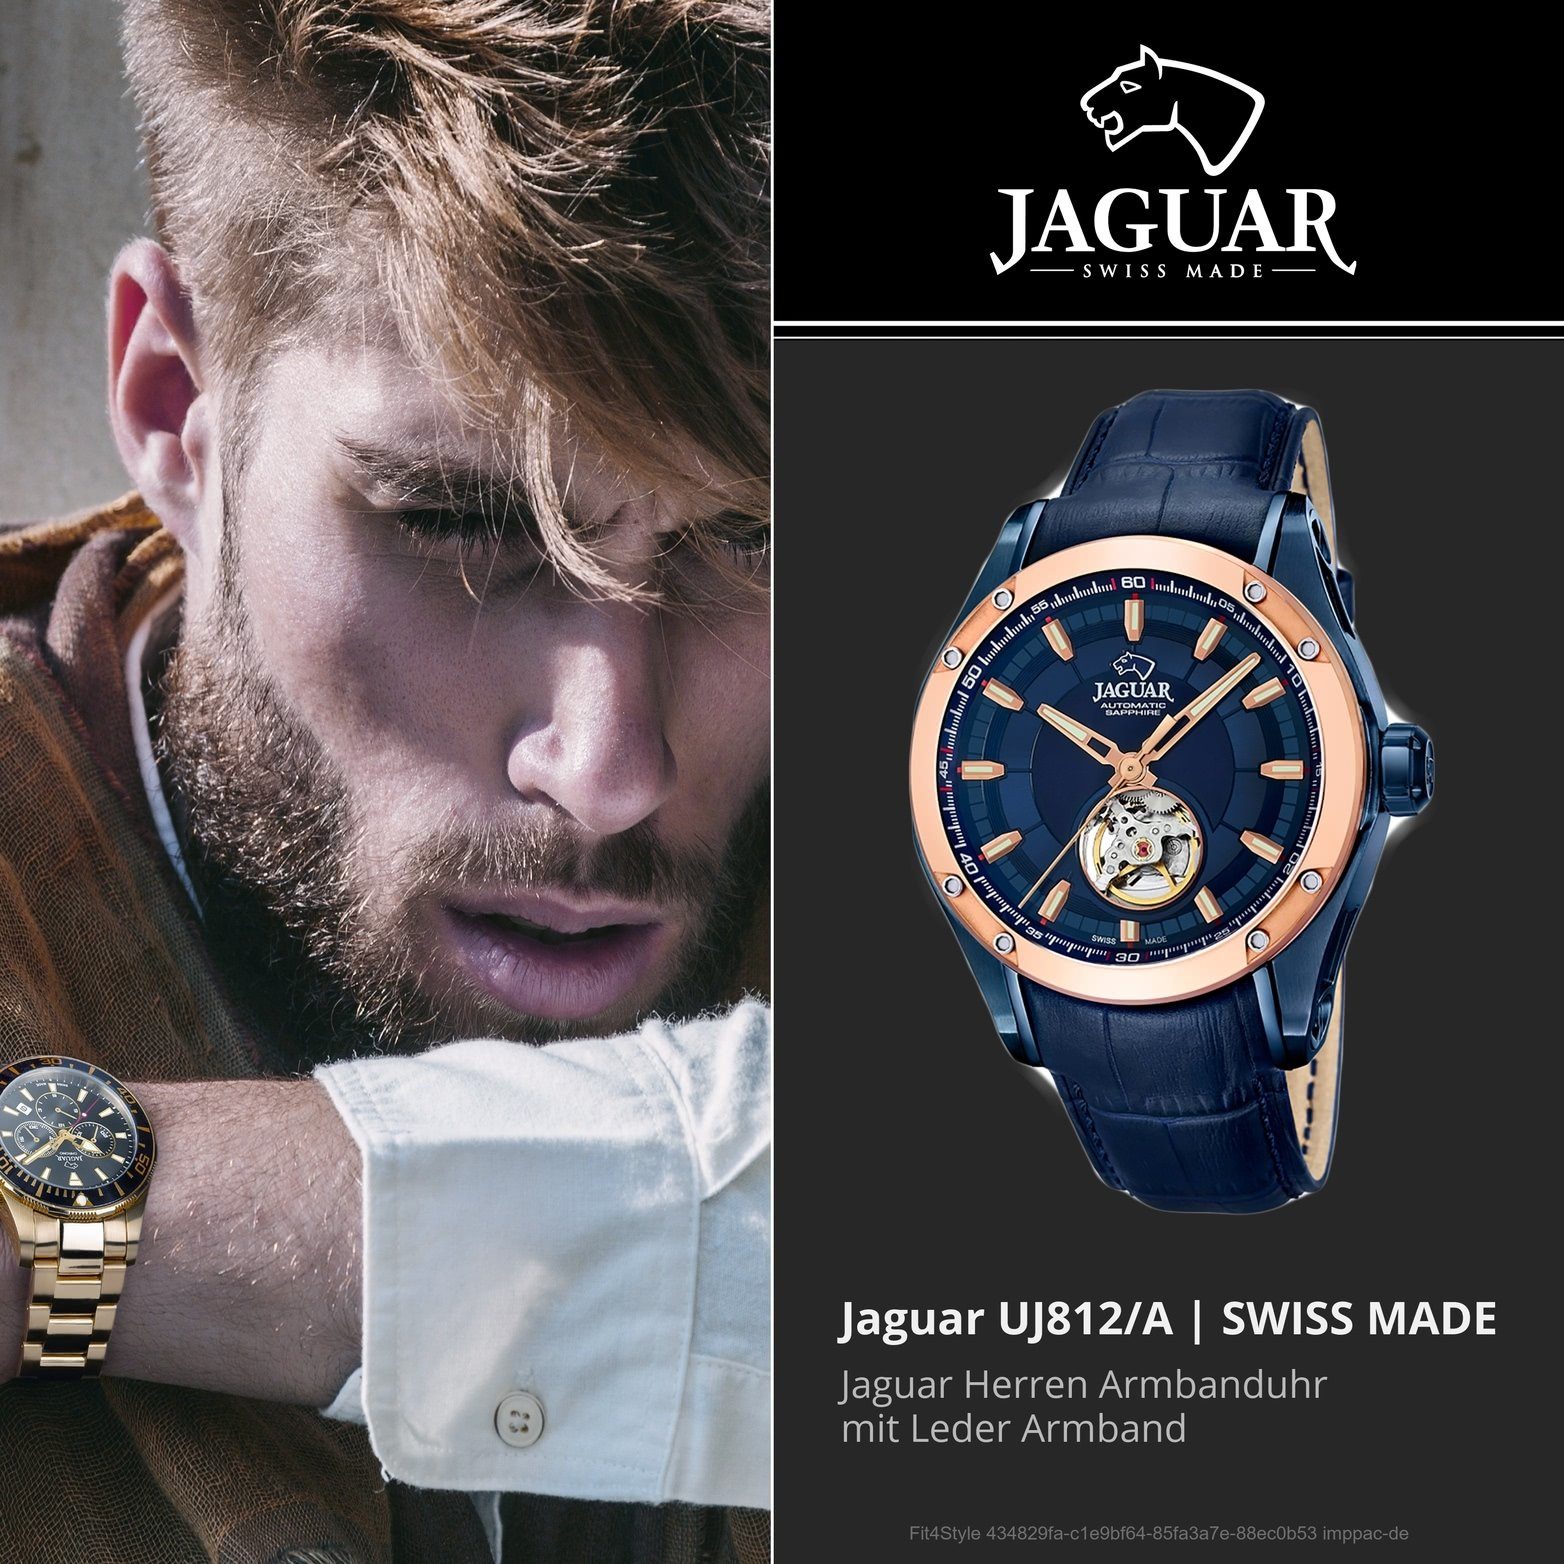 44mm), Herrenuhr Automatik, Elegant-S JAGUAR mit Lederarmband, Quarzuhr Uhr Leder (ca. Jaguar Herren rundes Gehäuse, groß J812/A